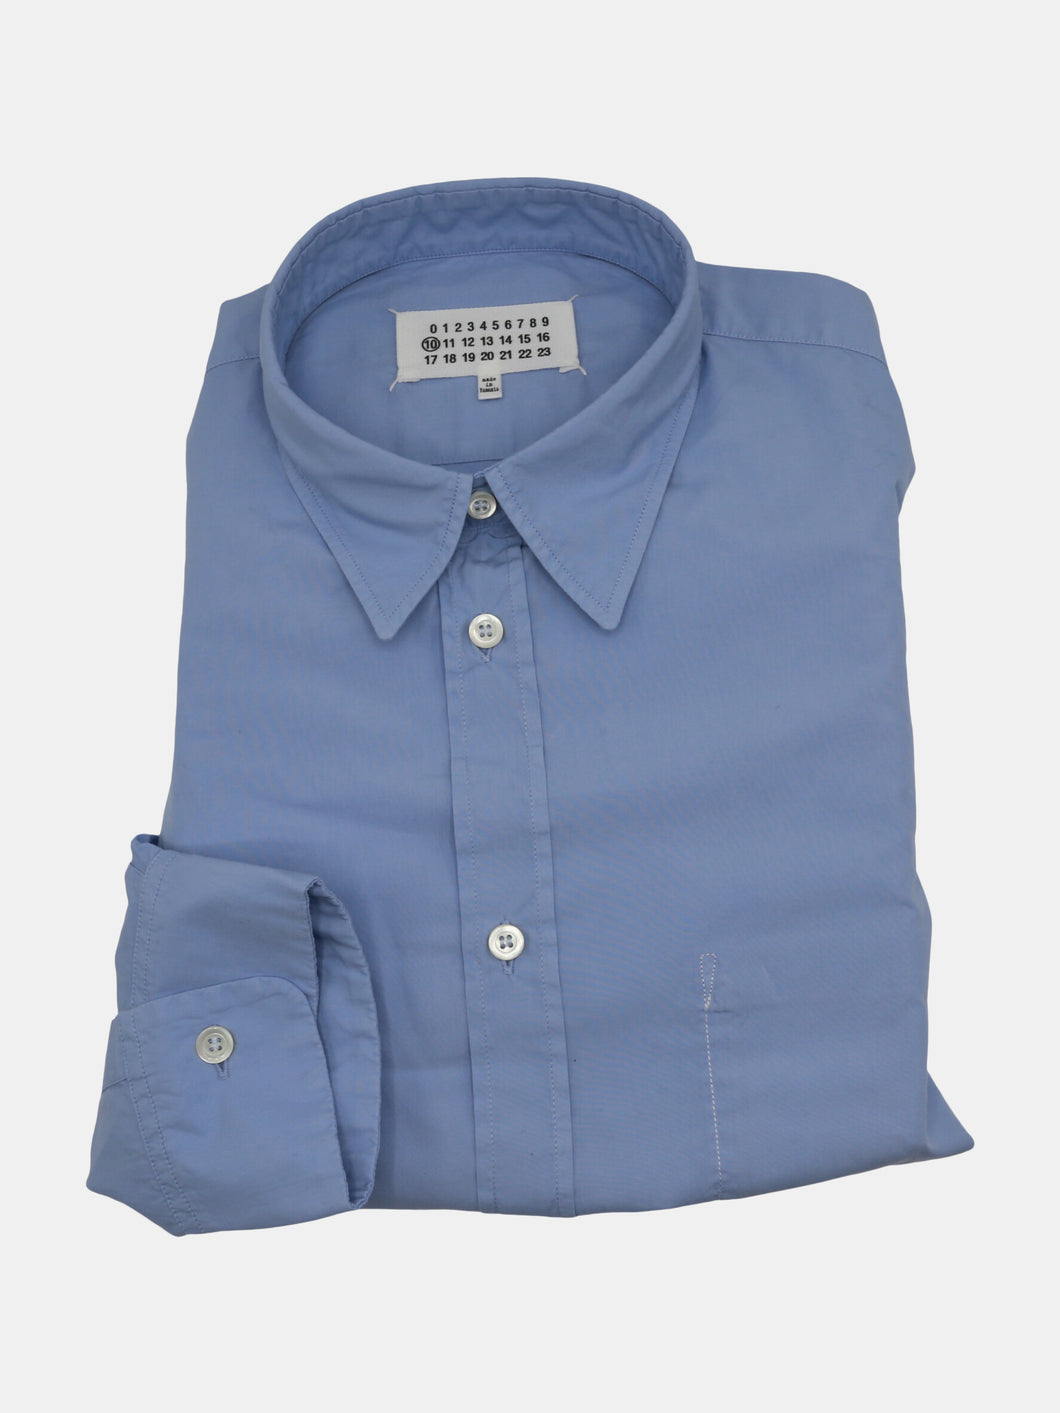 Maison Margiela Men's Blue Inner Pocket Dress Shirt Casual Button-Down - 41-16 (L)